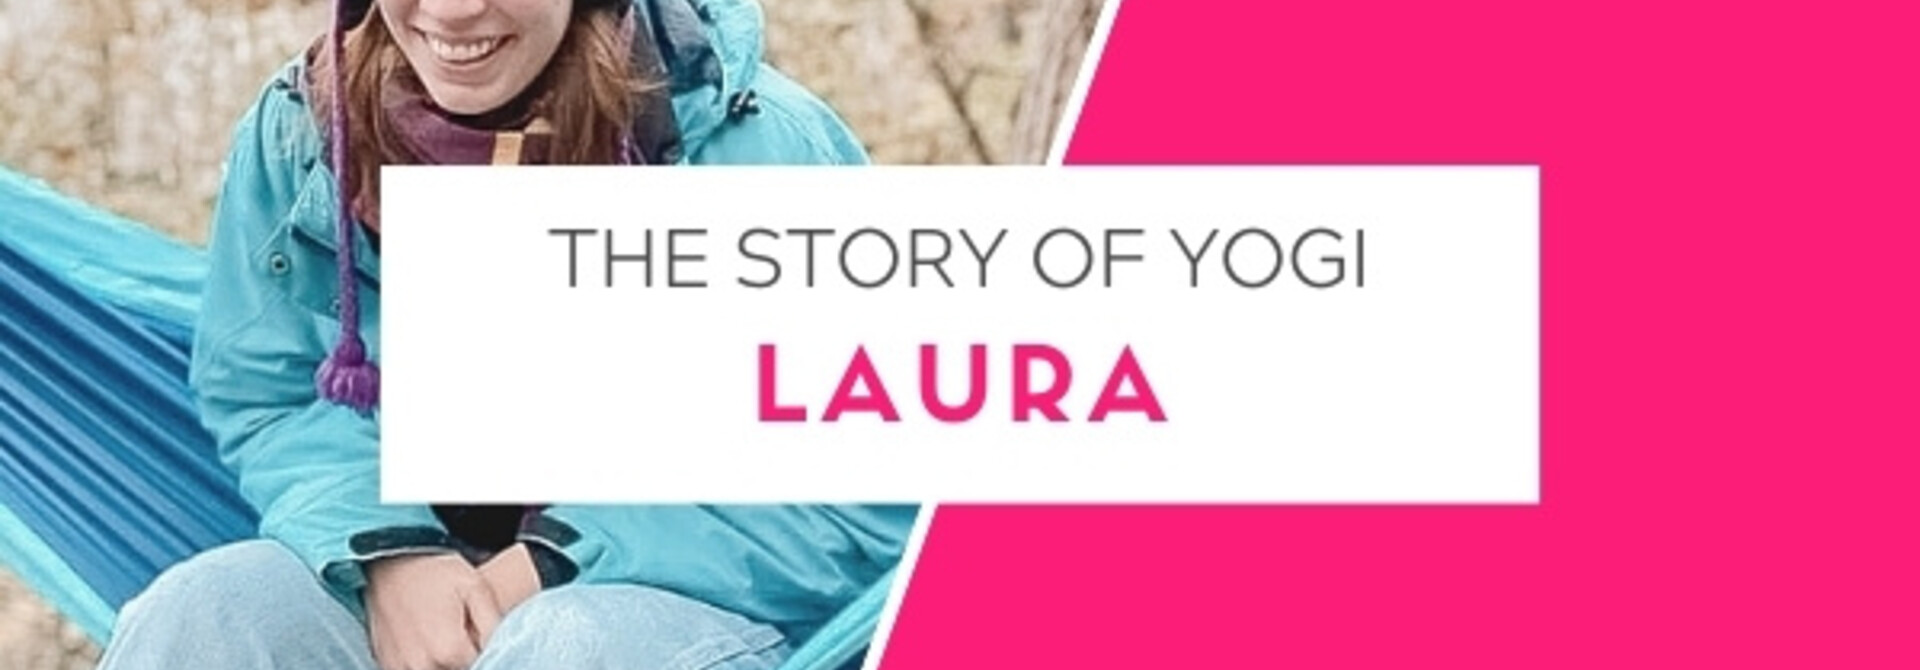 The story of yogi Laura